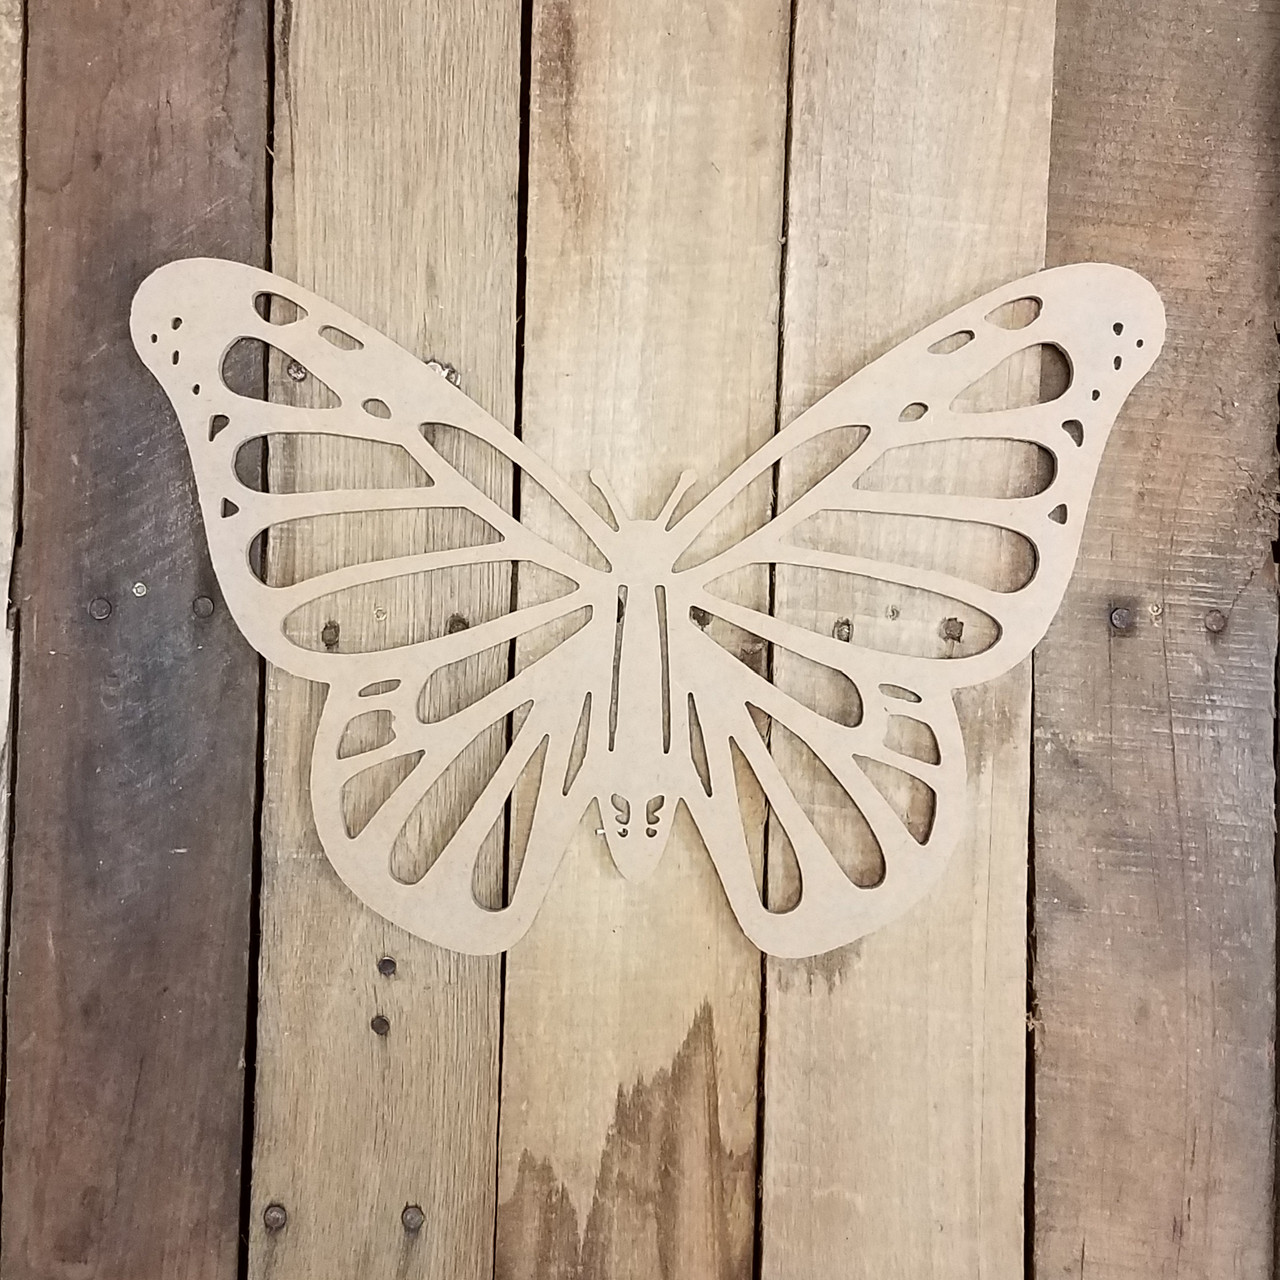 Butterfly Wood Shape, Wooden Butterfly Shape Blank, Unfinished Butterfly  Wood Blank, Shapes for Crafts DIY Wood Blank, Butterfly Shape Blank 